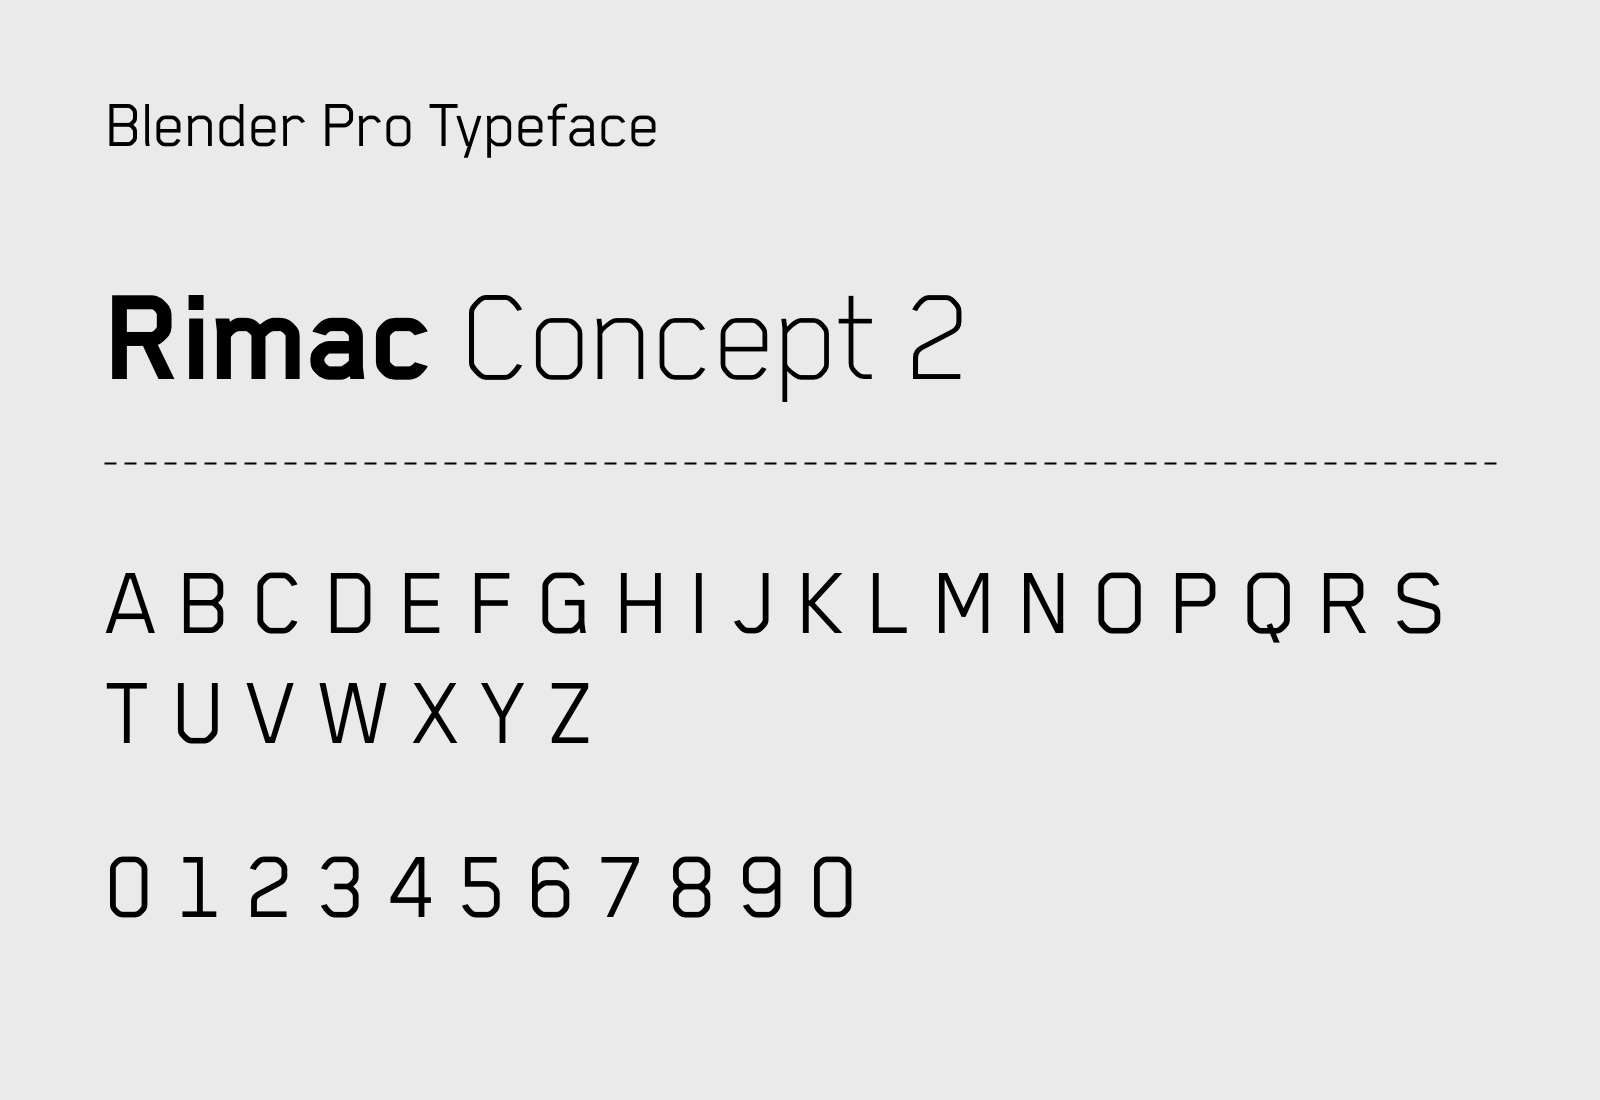 Rimac Concept 2 Typeface - Blender